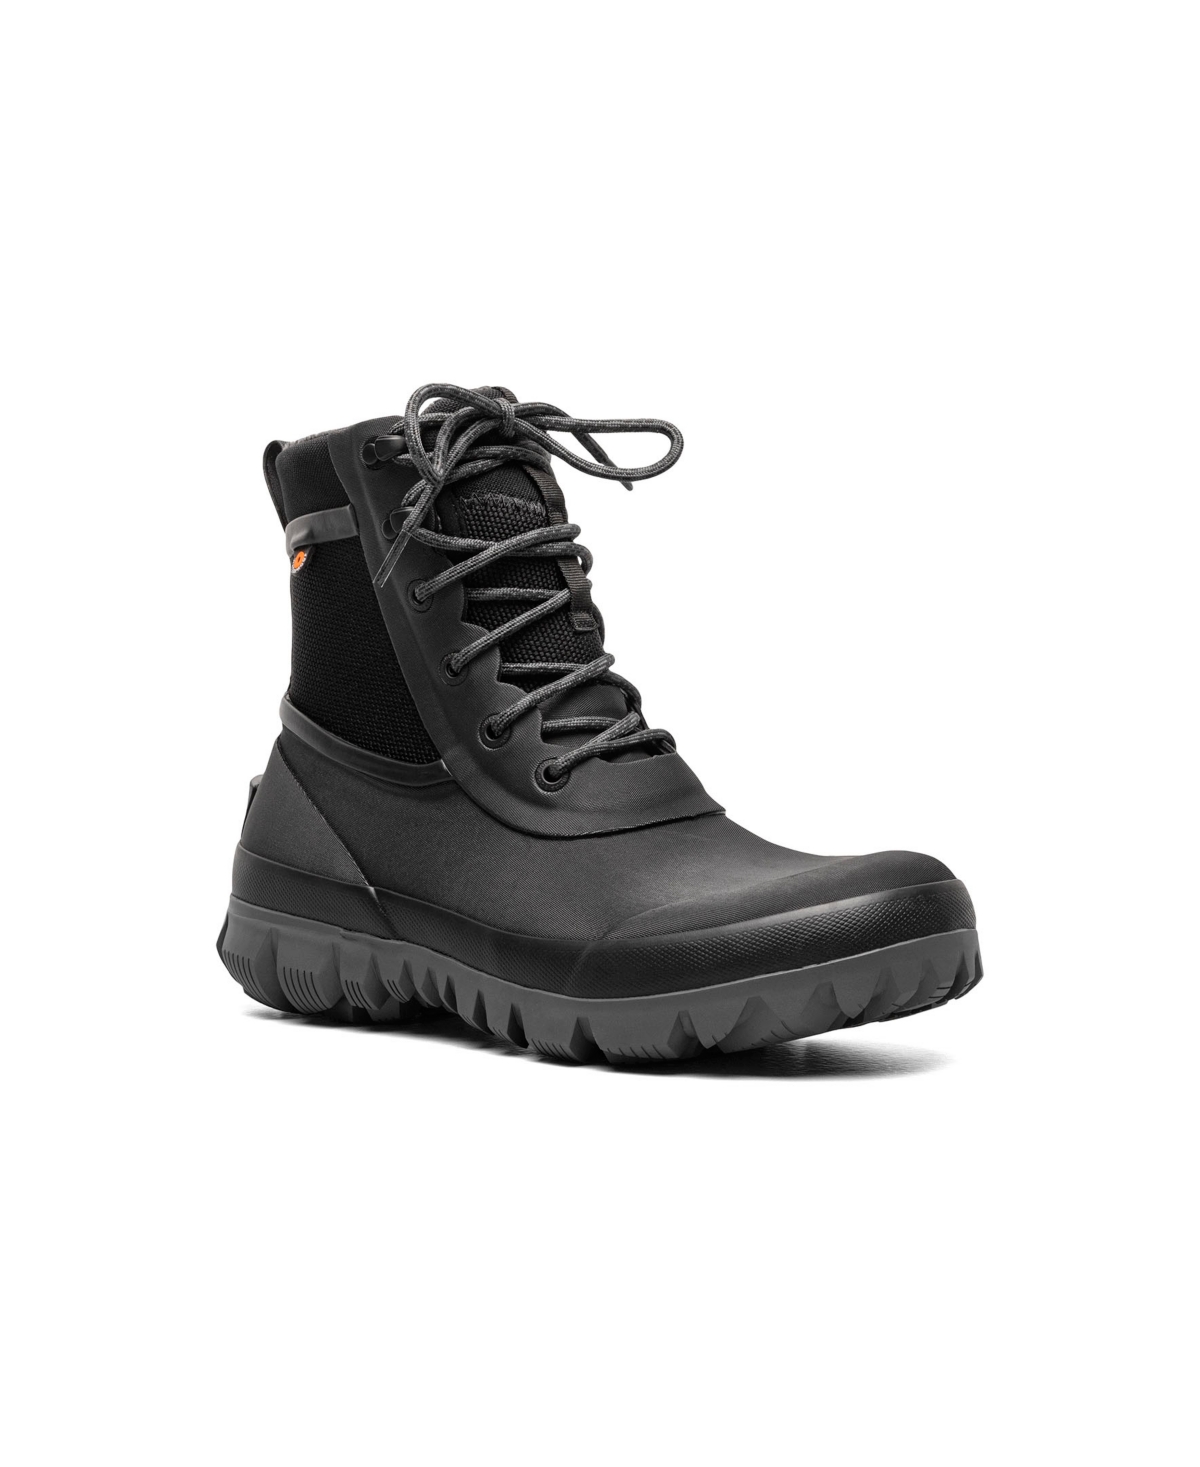 Men's Arcata Urban Slip-Resistant Lace Up Boot - Black